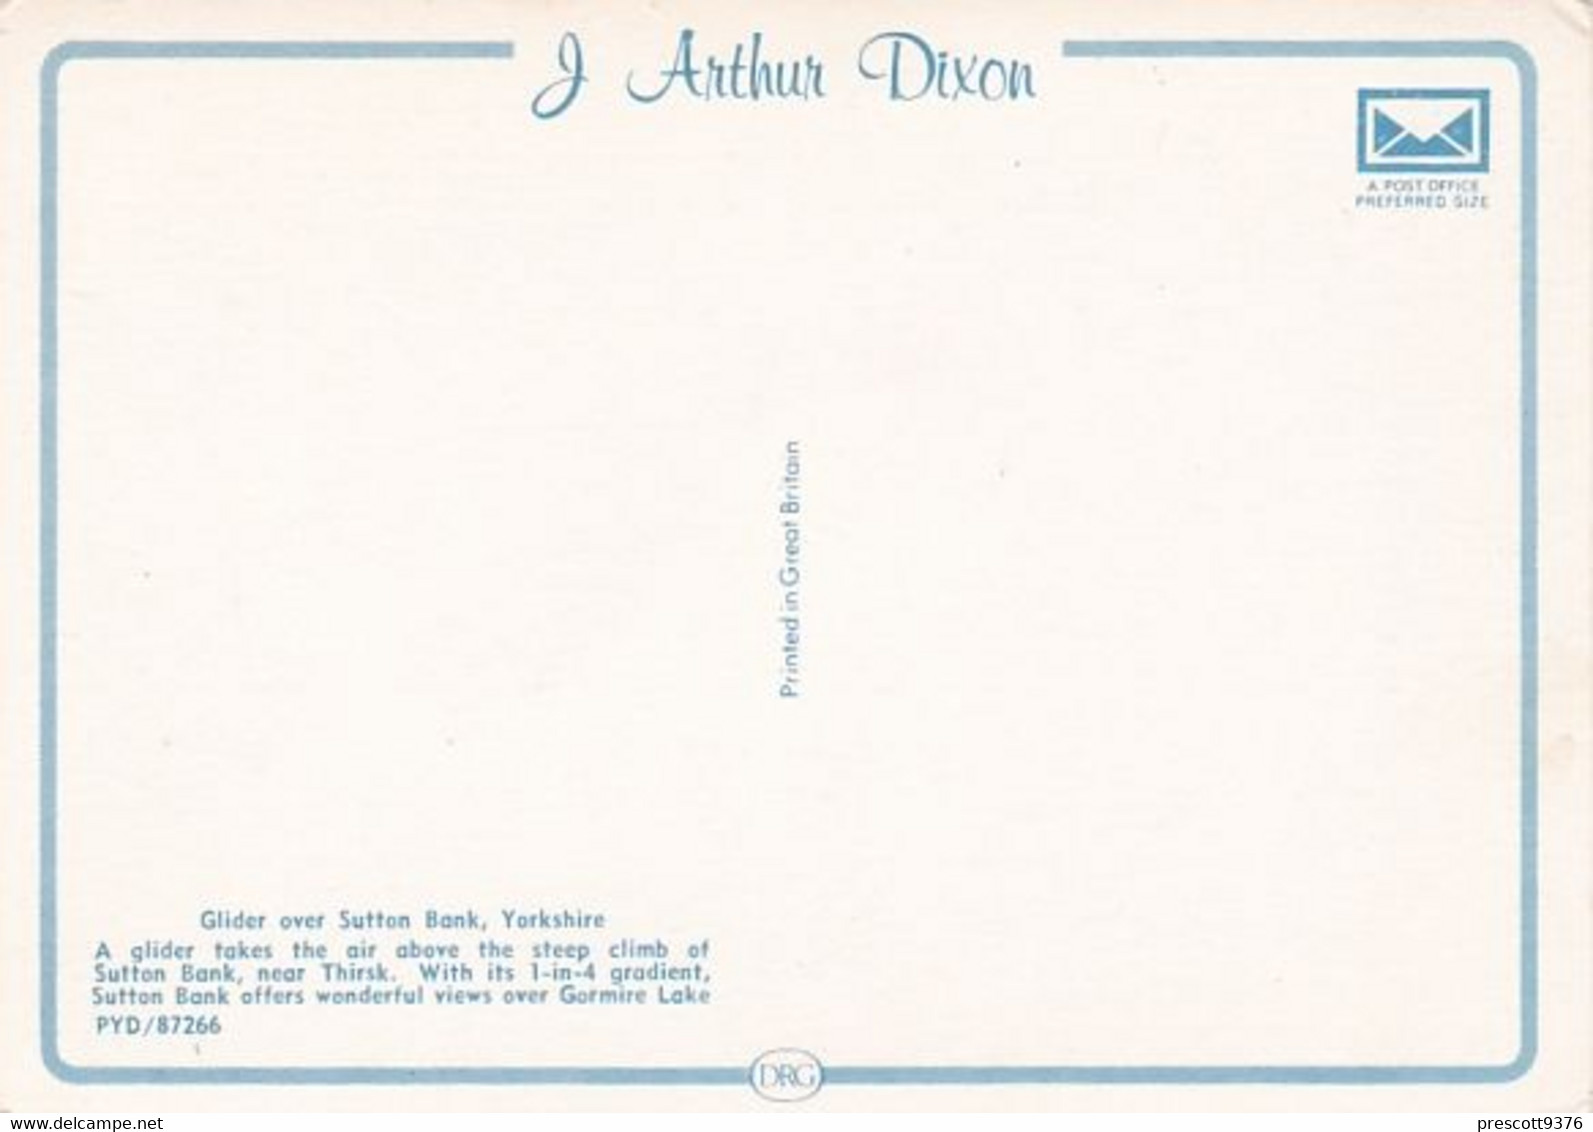 Glider Over Sutton Bank - Unused Postcard - Yorkshire - J Arthur Dixon - - Whitby